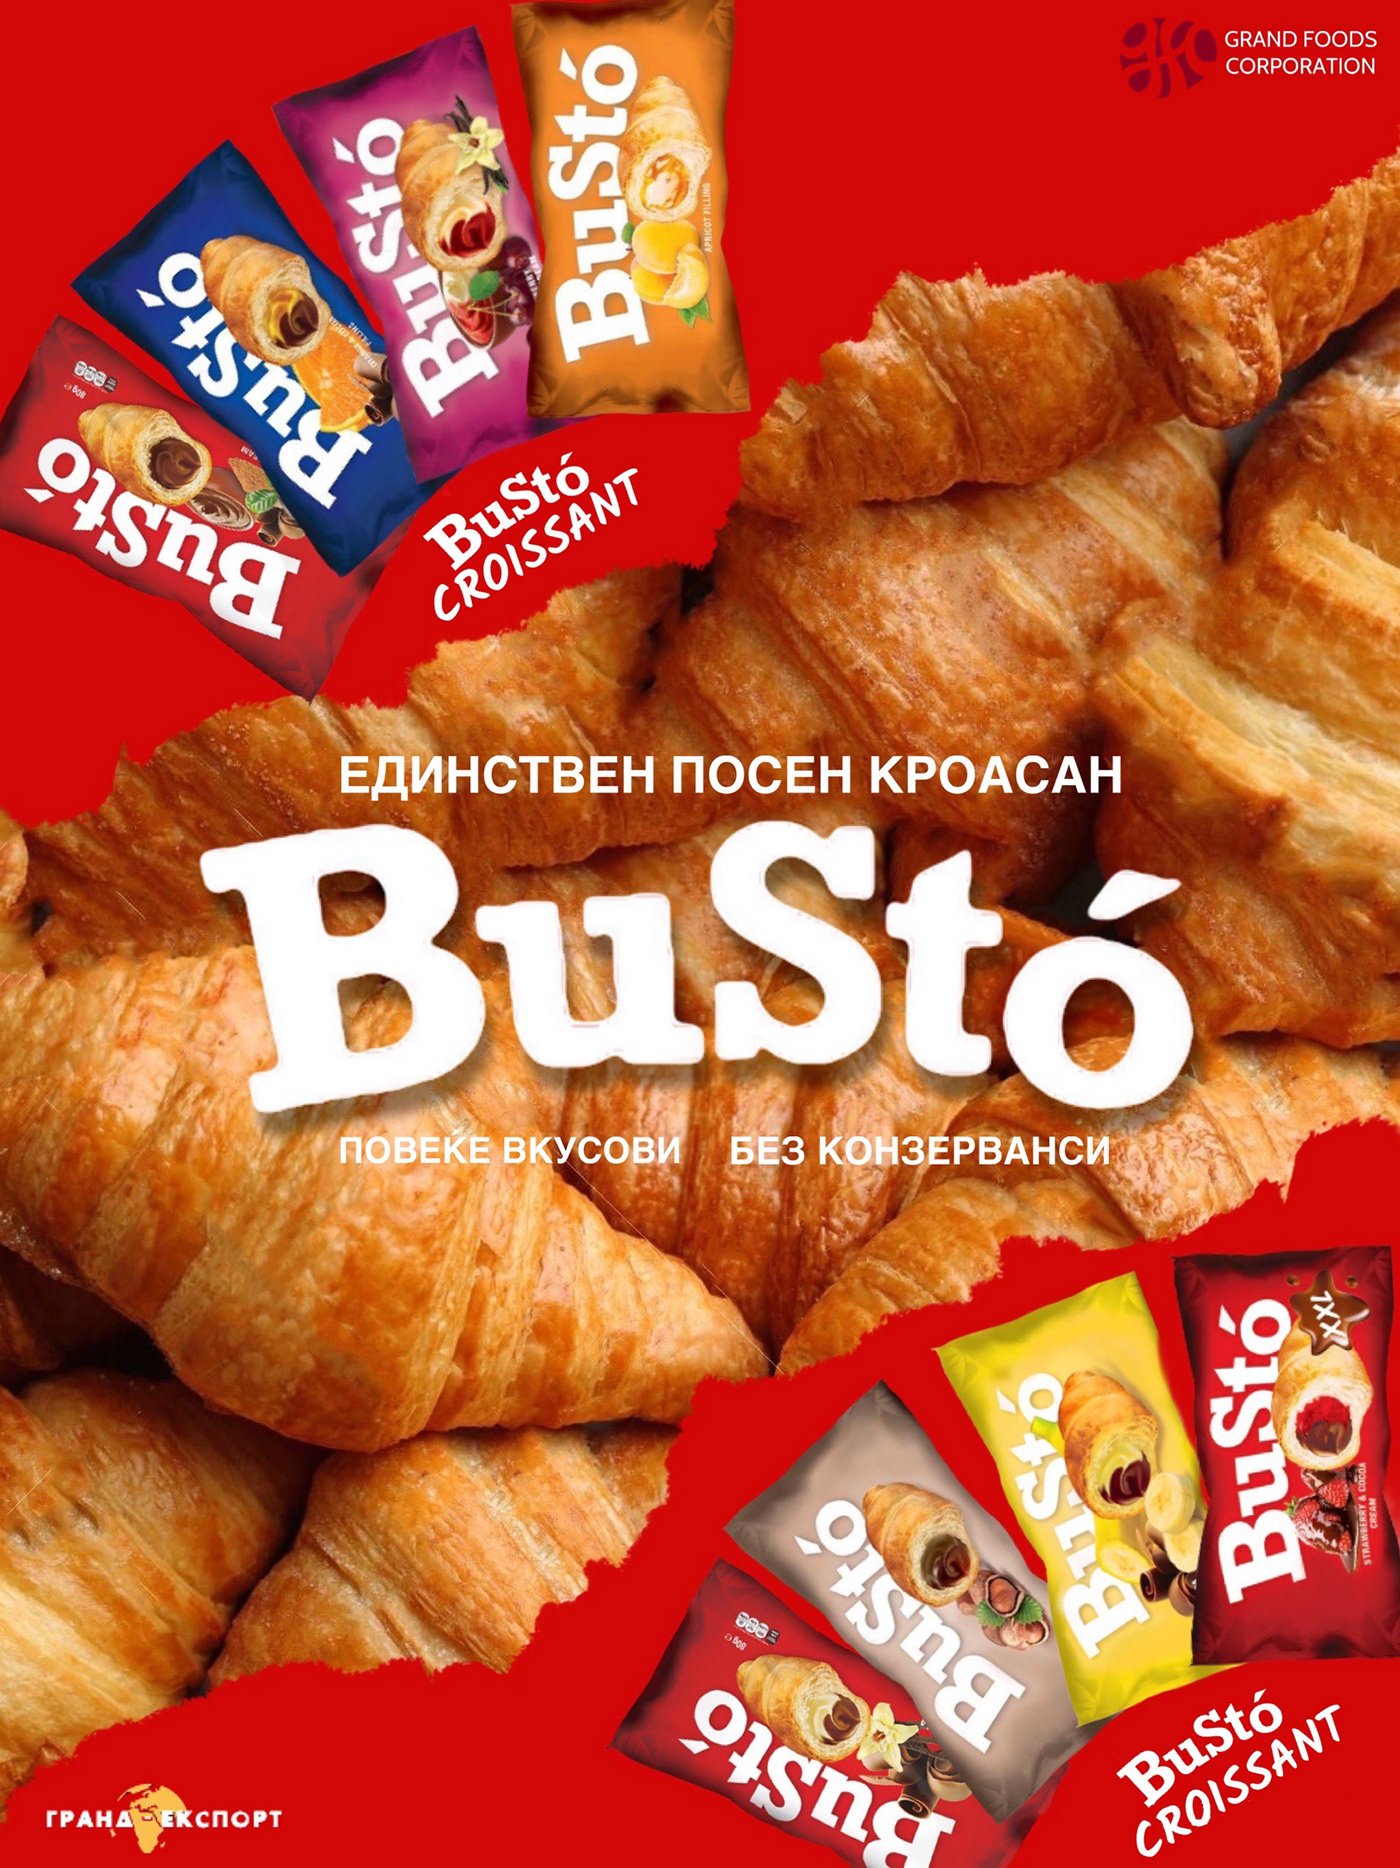 croissant Food  cream croissant company door reklam Promotions Banner